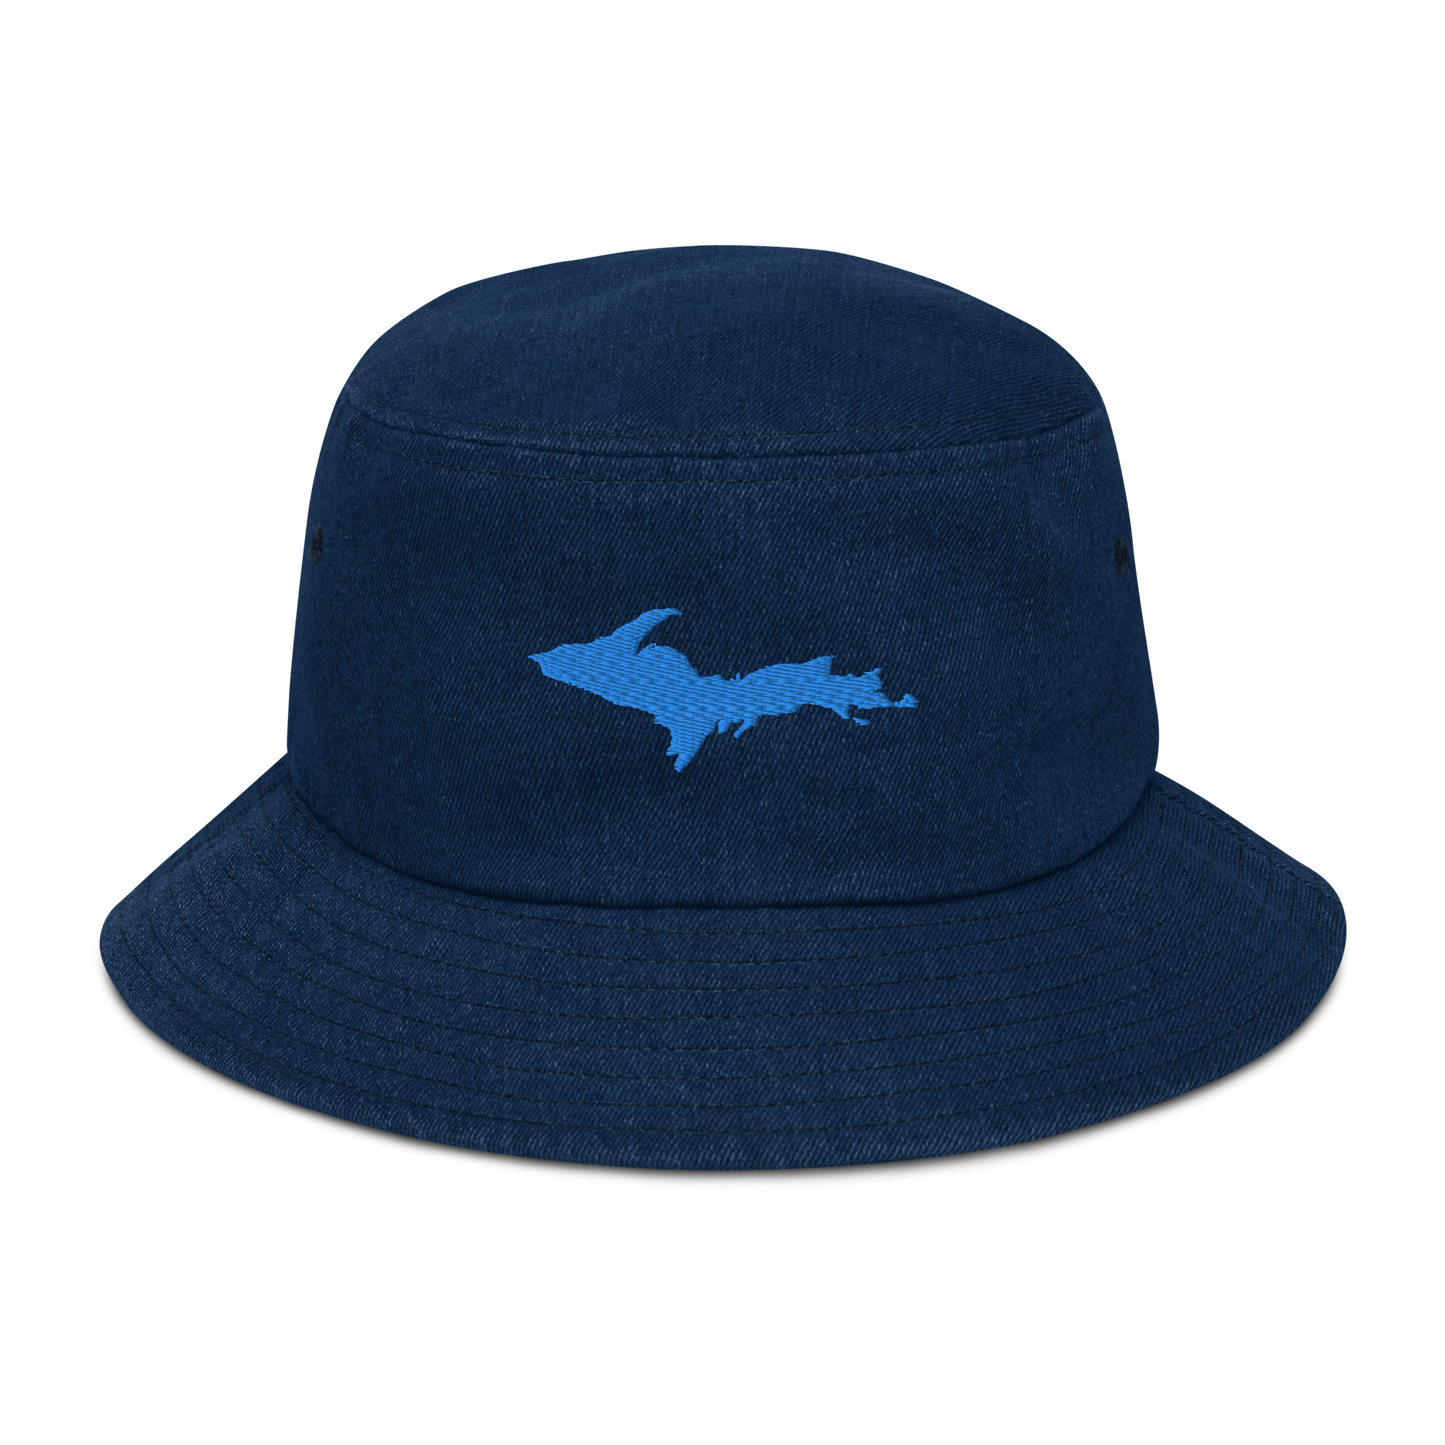 Michigan Upper Peninsula Denim Bucket Hat (w/ Azure UP Outline)